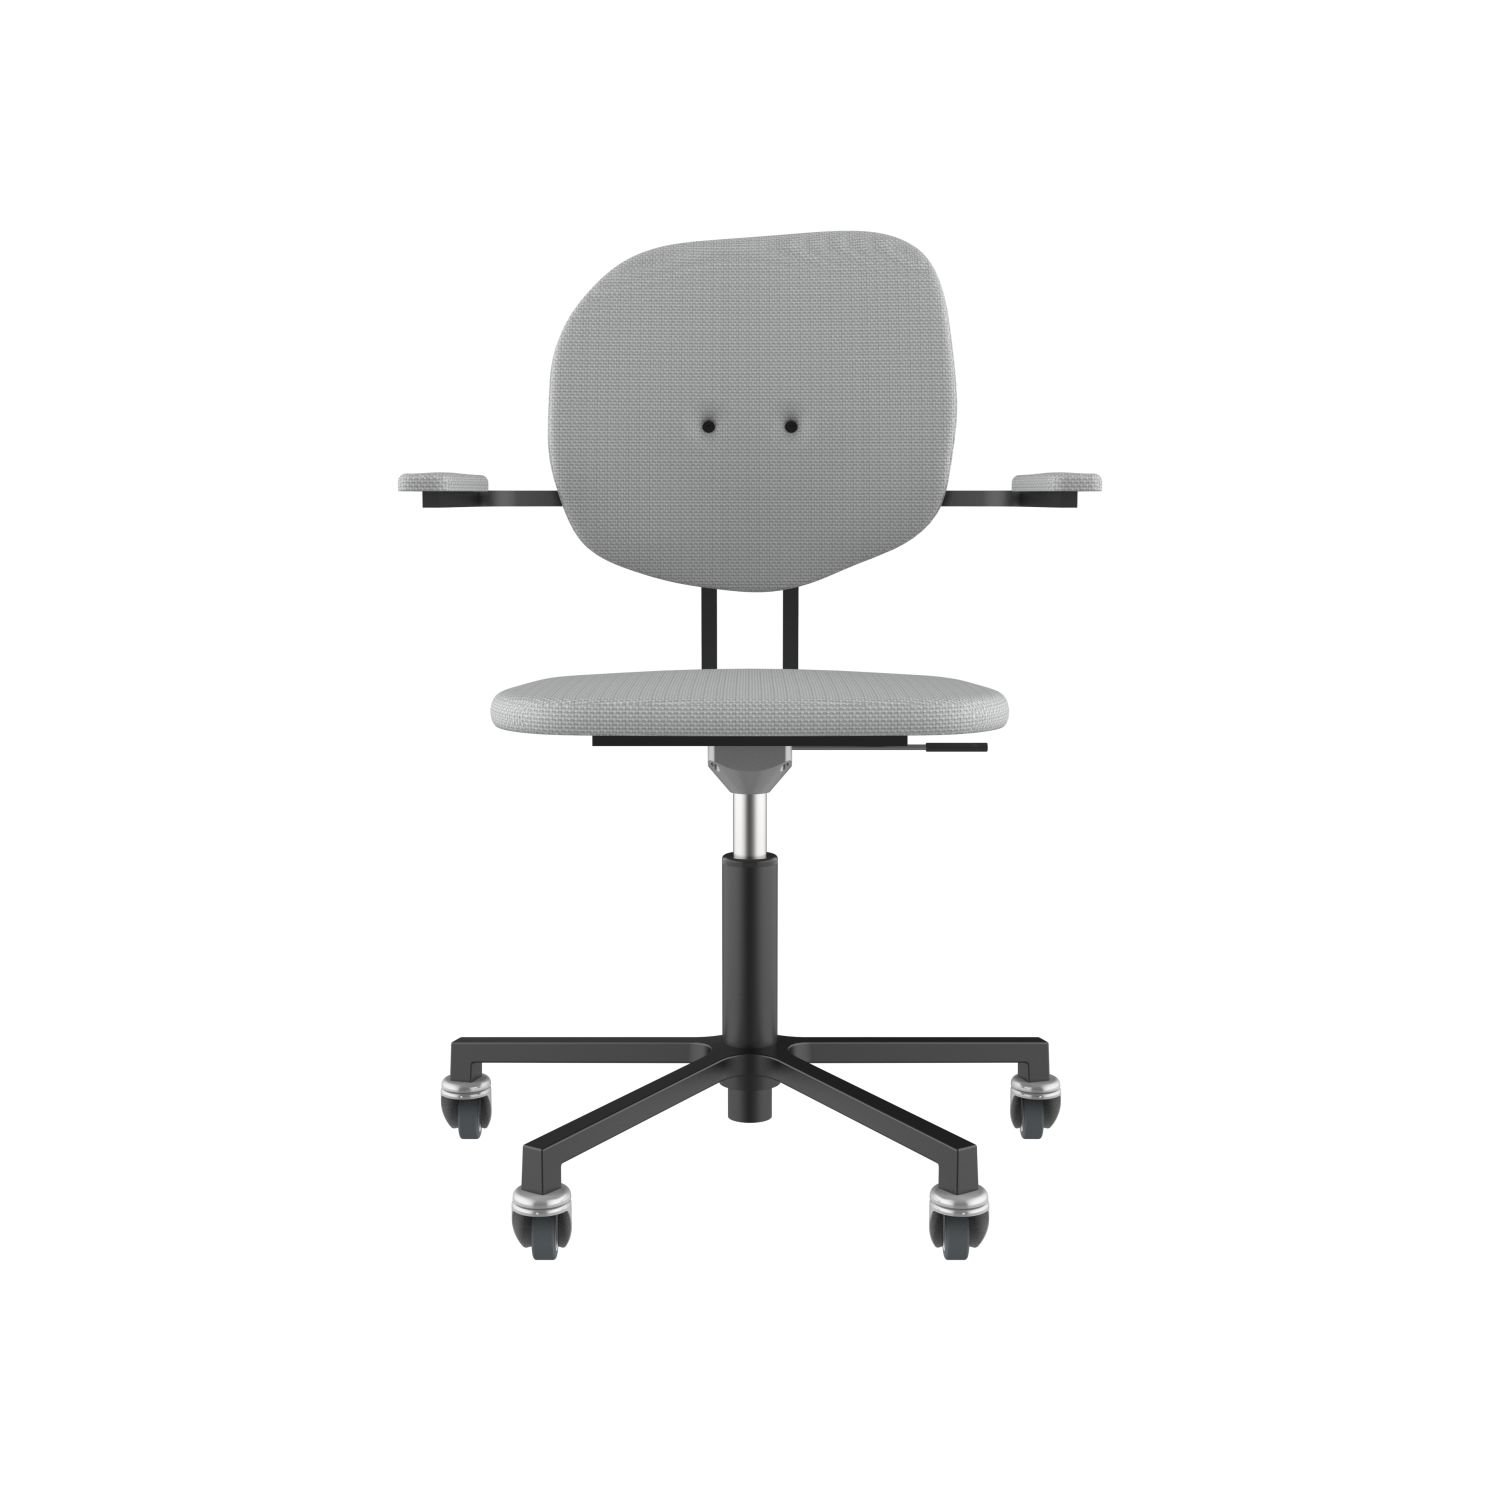 lensvelt maarten baas office chair with armrests backrest h breeze light grey 171 black ral9005 soft wheels